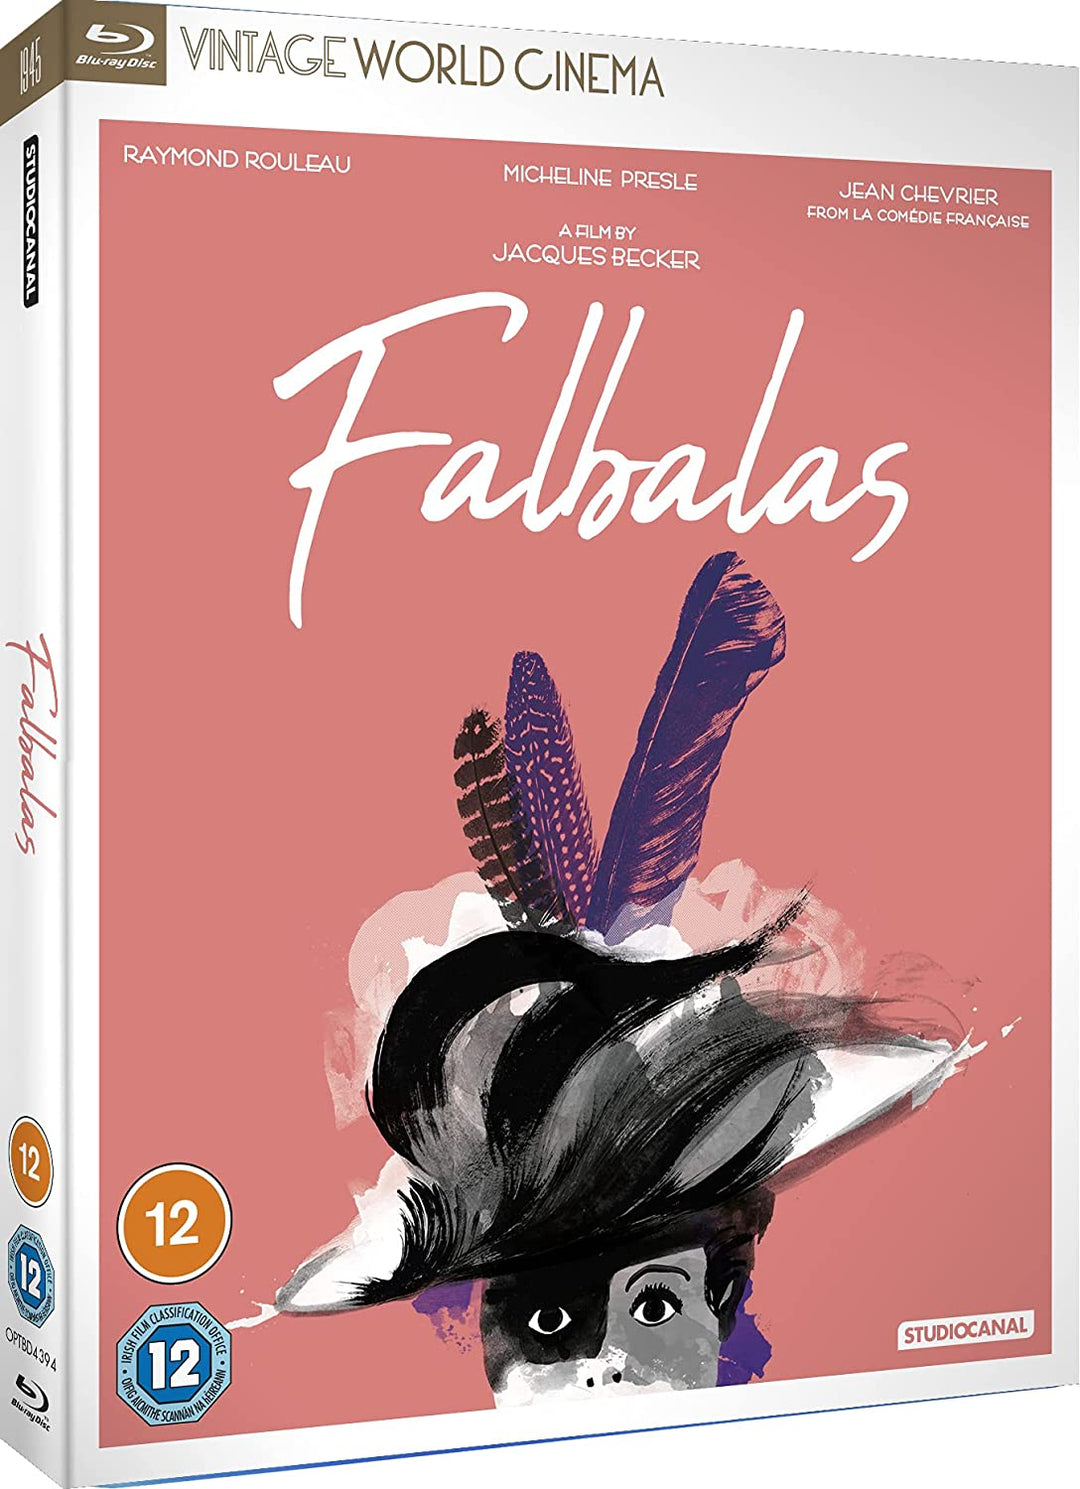 Falbalas (Vintage World Cinema) - Drama/Romance [BLu-ray]